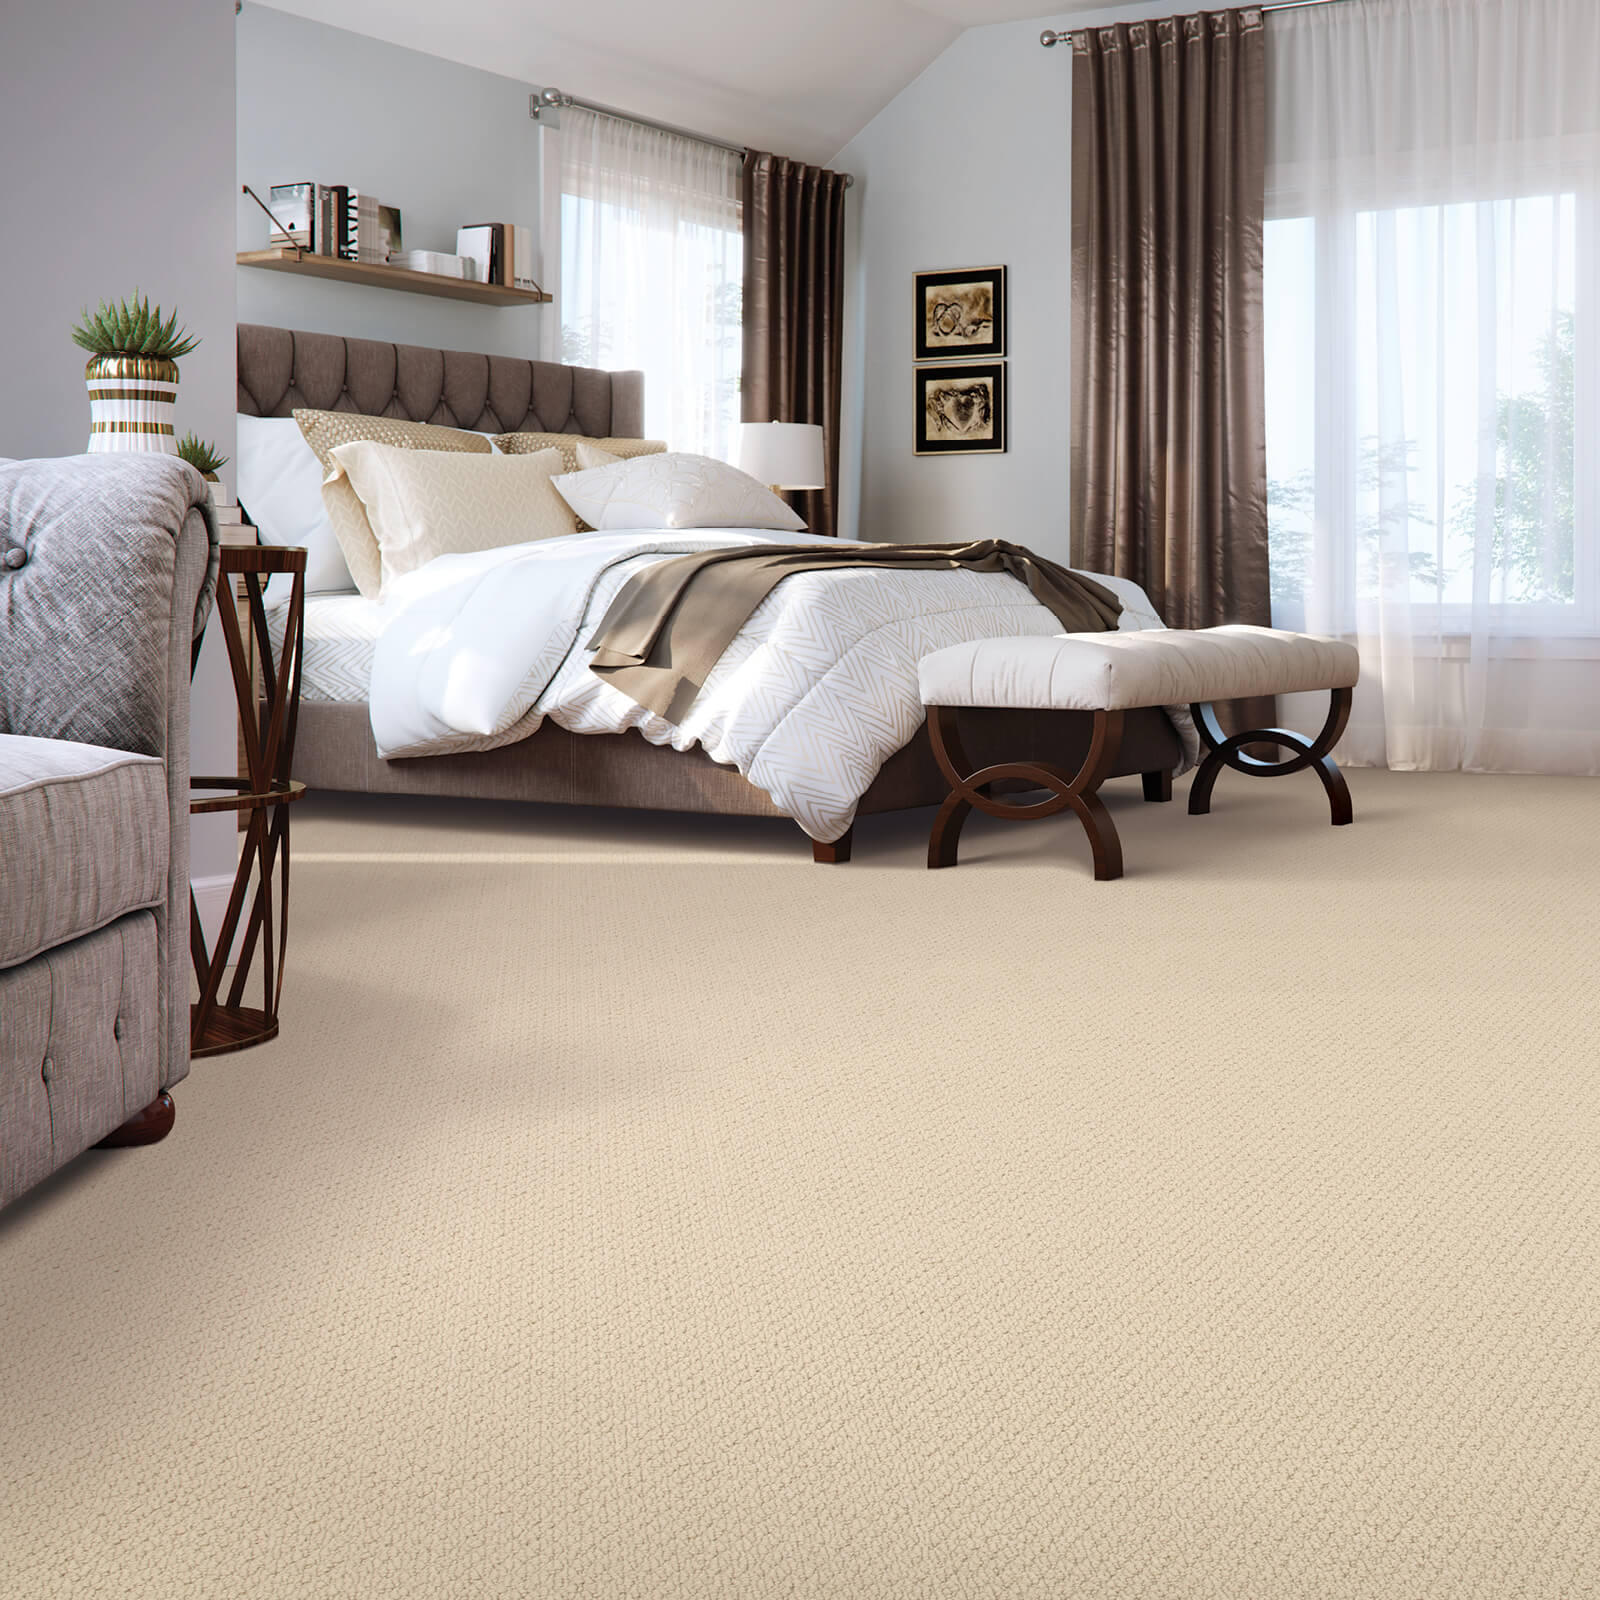 New carpet in bedroom | Floorida Floors